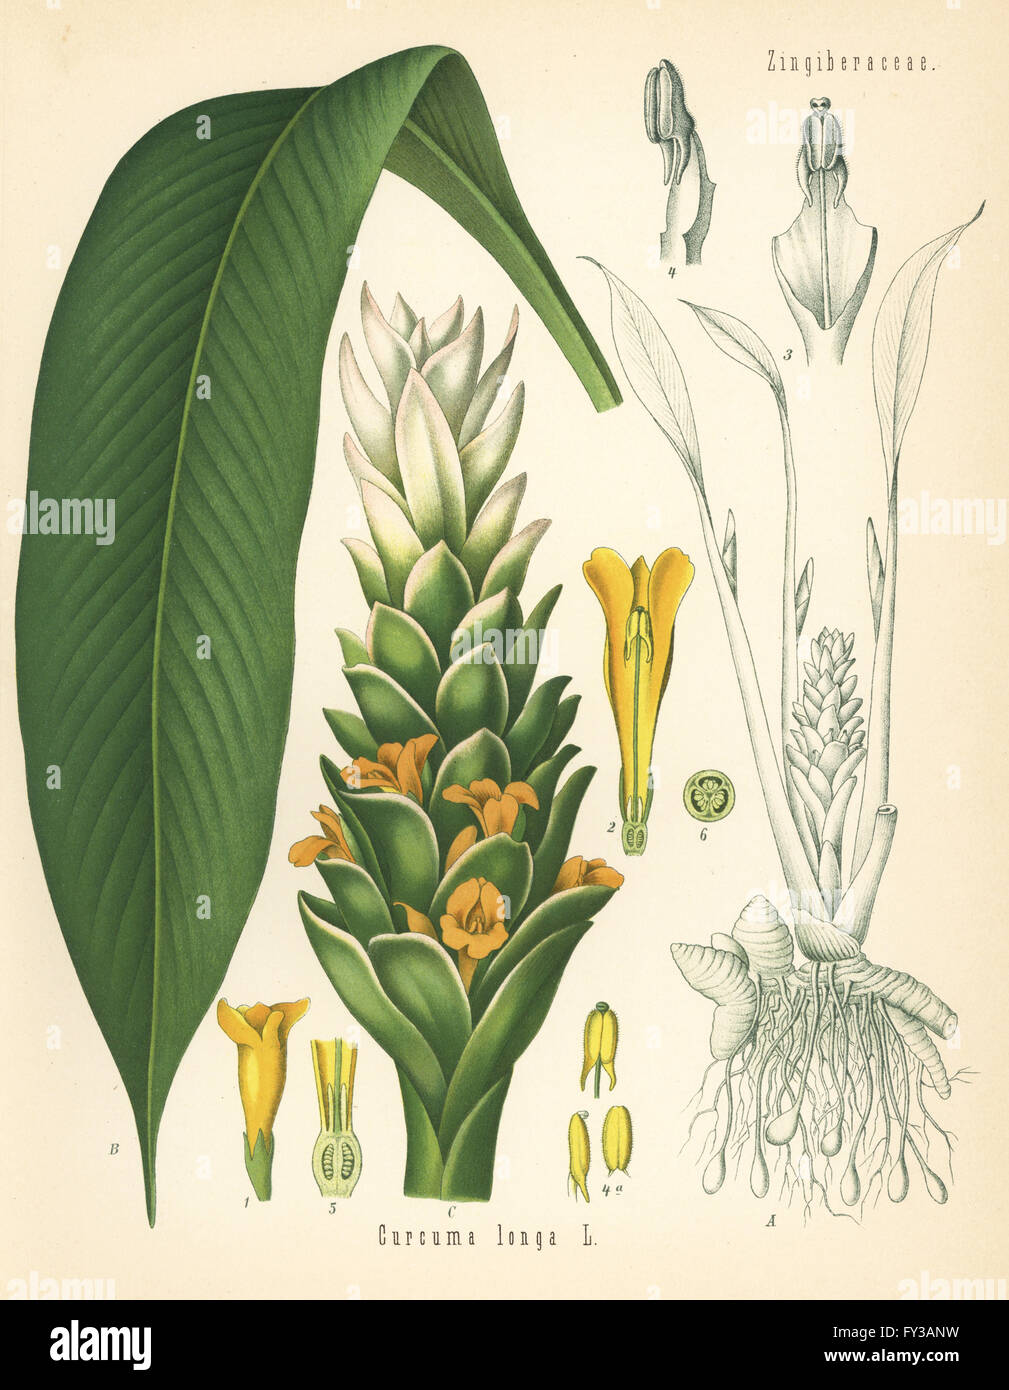 Turmeric, Curcuma longa. Chromolithograph after a botanical illustration from Hermann Adolph Koehler's Medicinal Plants, edited by Gustav Pabst, Koehler, Germany, 1887. Stock Photo